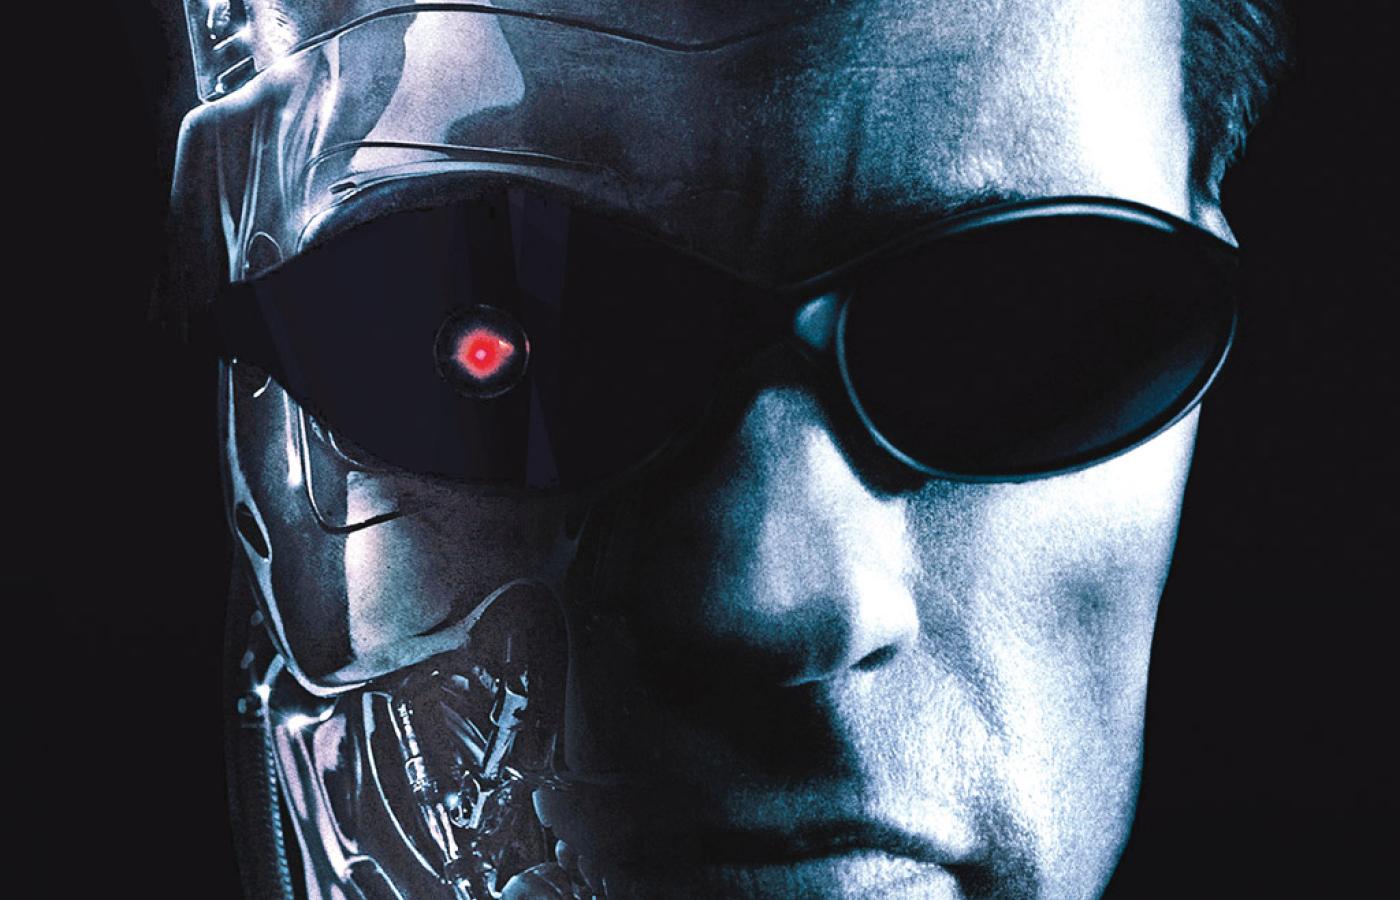 Kadr z filmu „Terminator”.